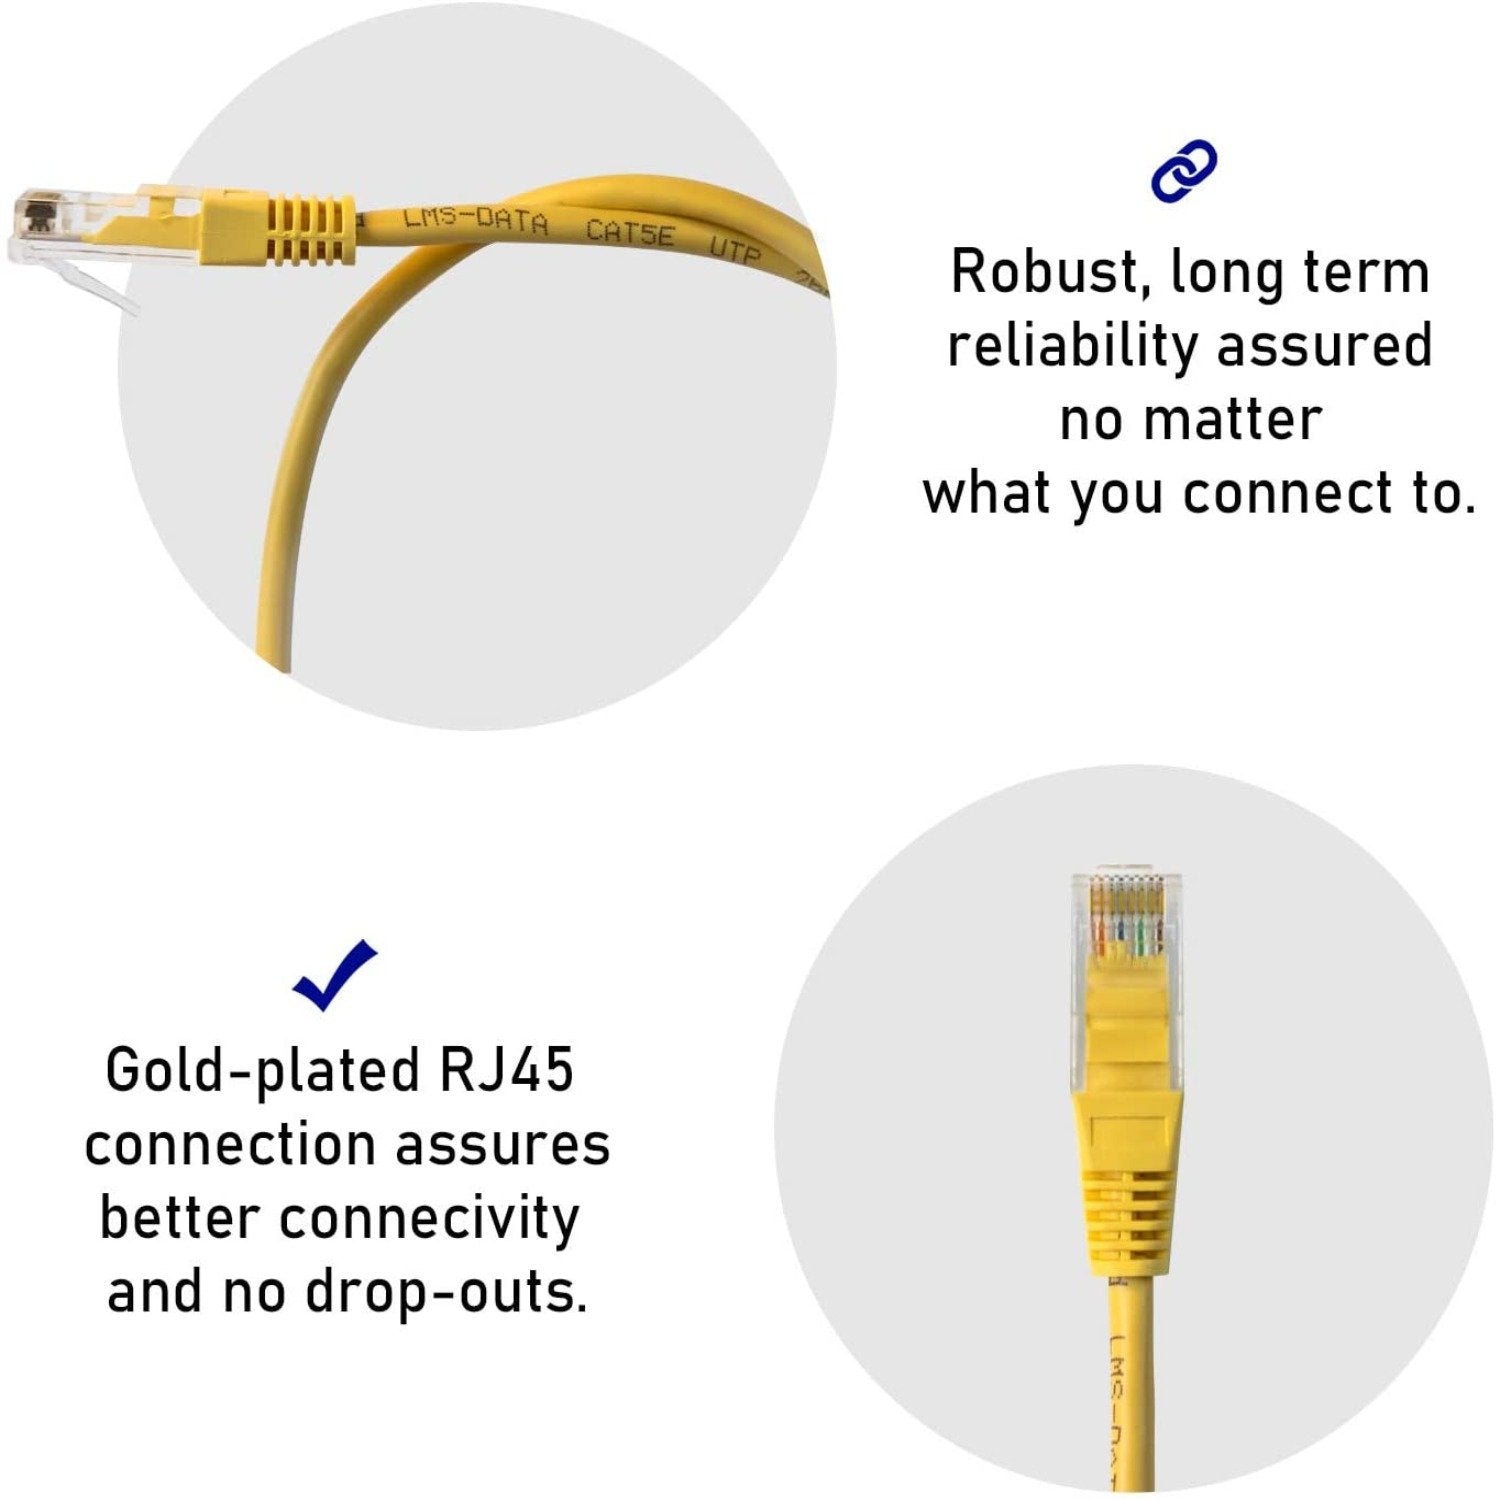 15.0m  LMS Data Ethernet Cat6 RJ45 UTP Patch cable cord, LAN 10/100/1000Mbit/s Cable suitable - Ethernet Cable 15m Cat6